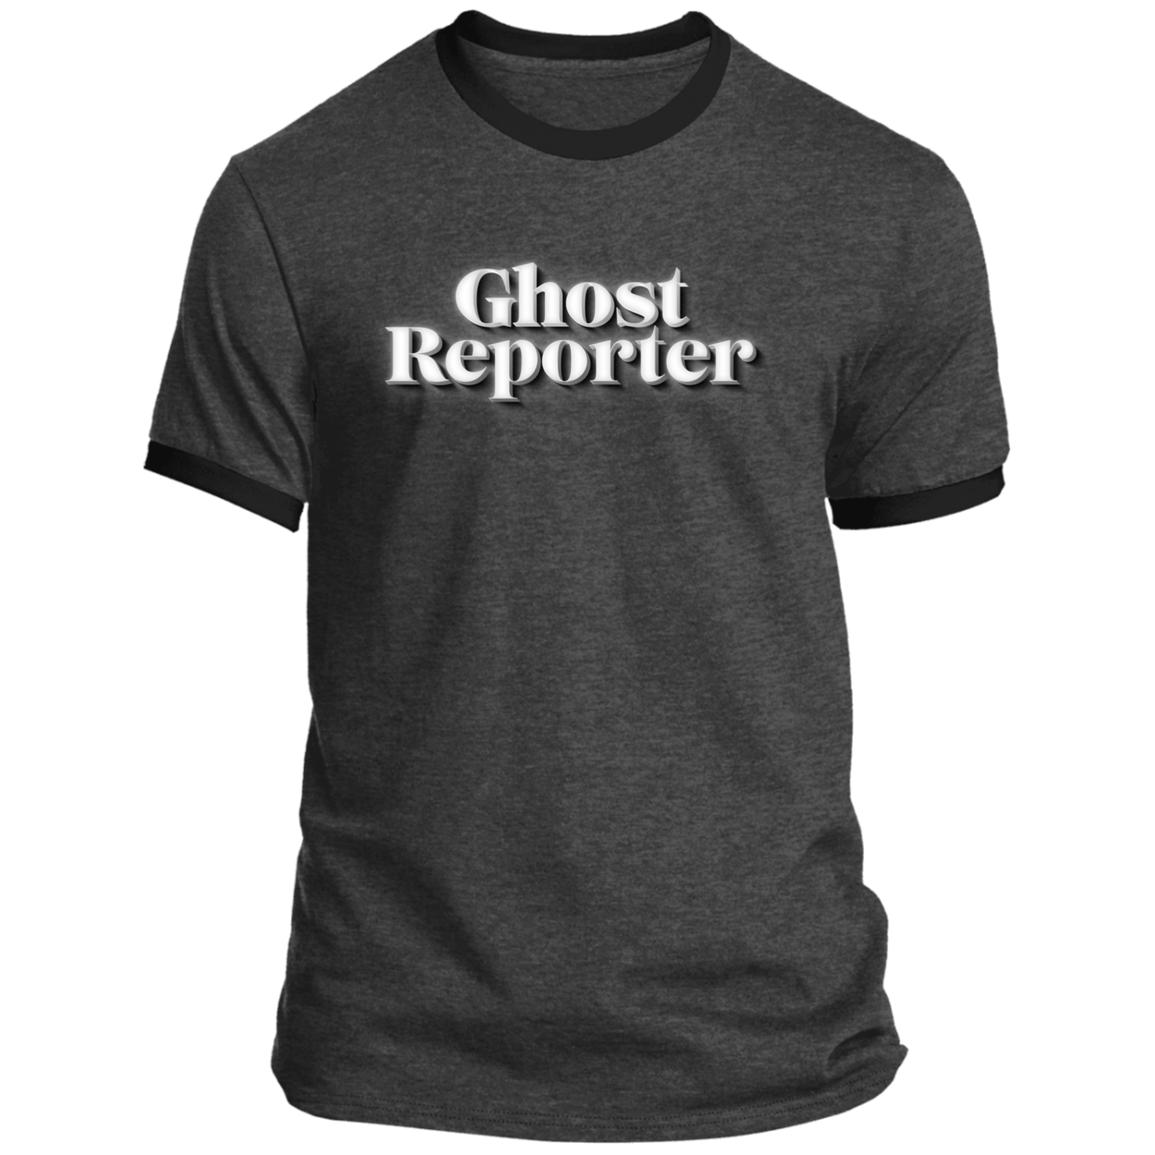 Ghost Report "Ghost Reporter" Tee